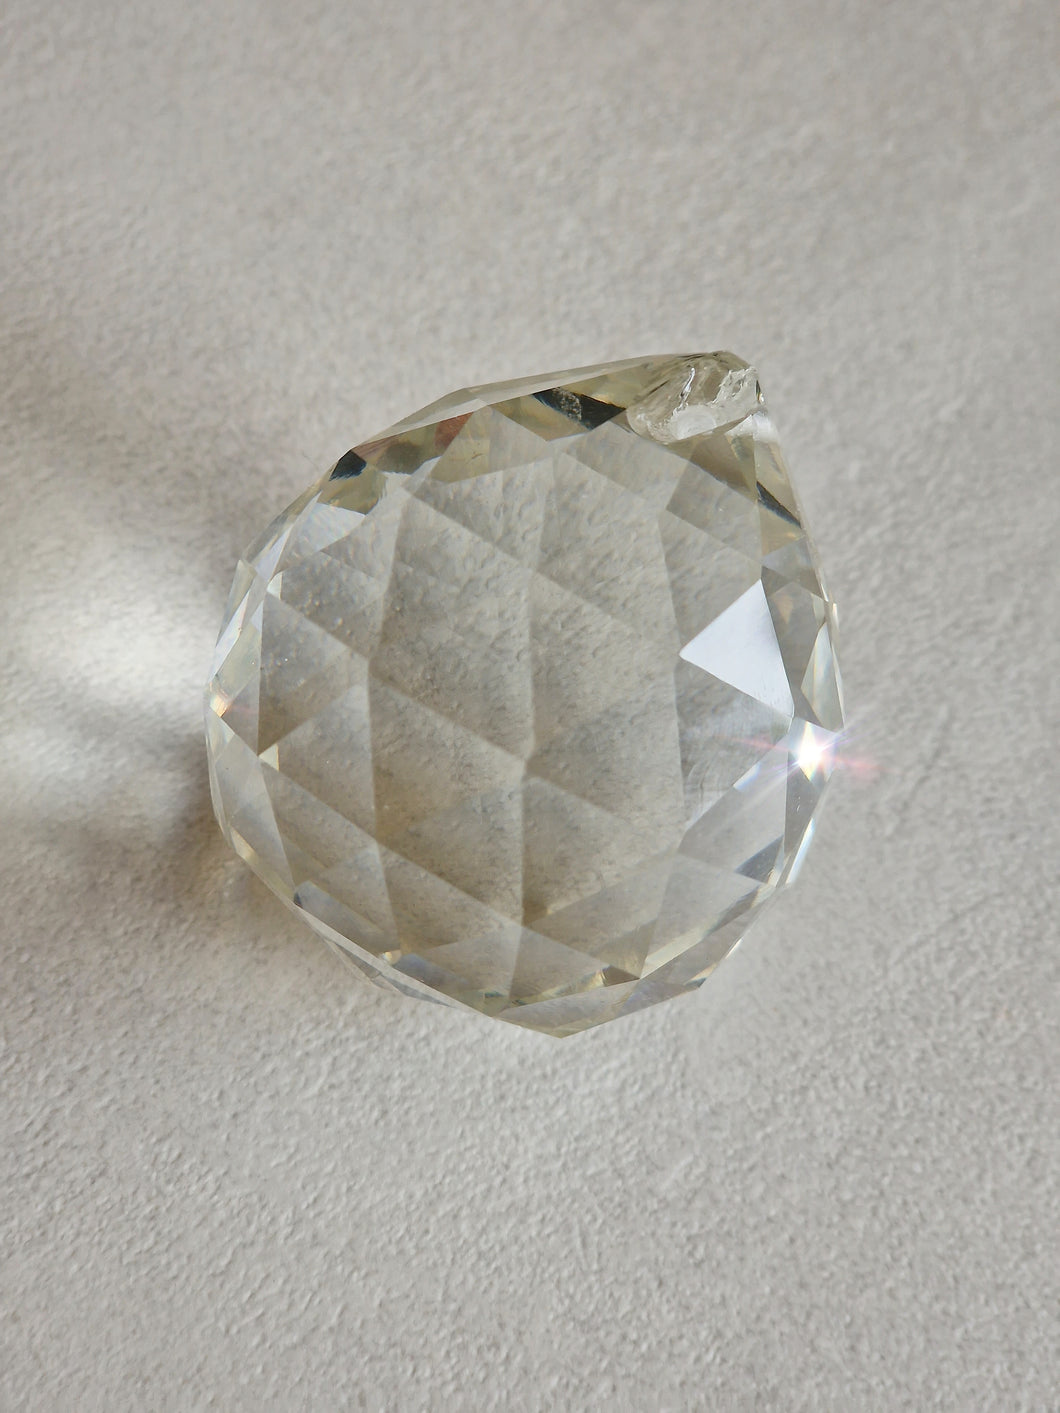 Round Glass Suncatcher prism